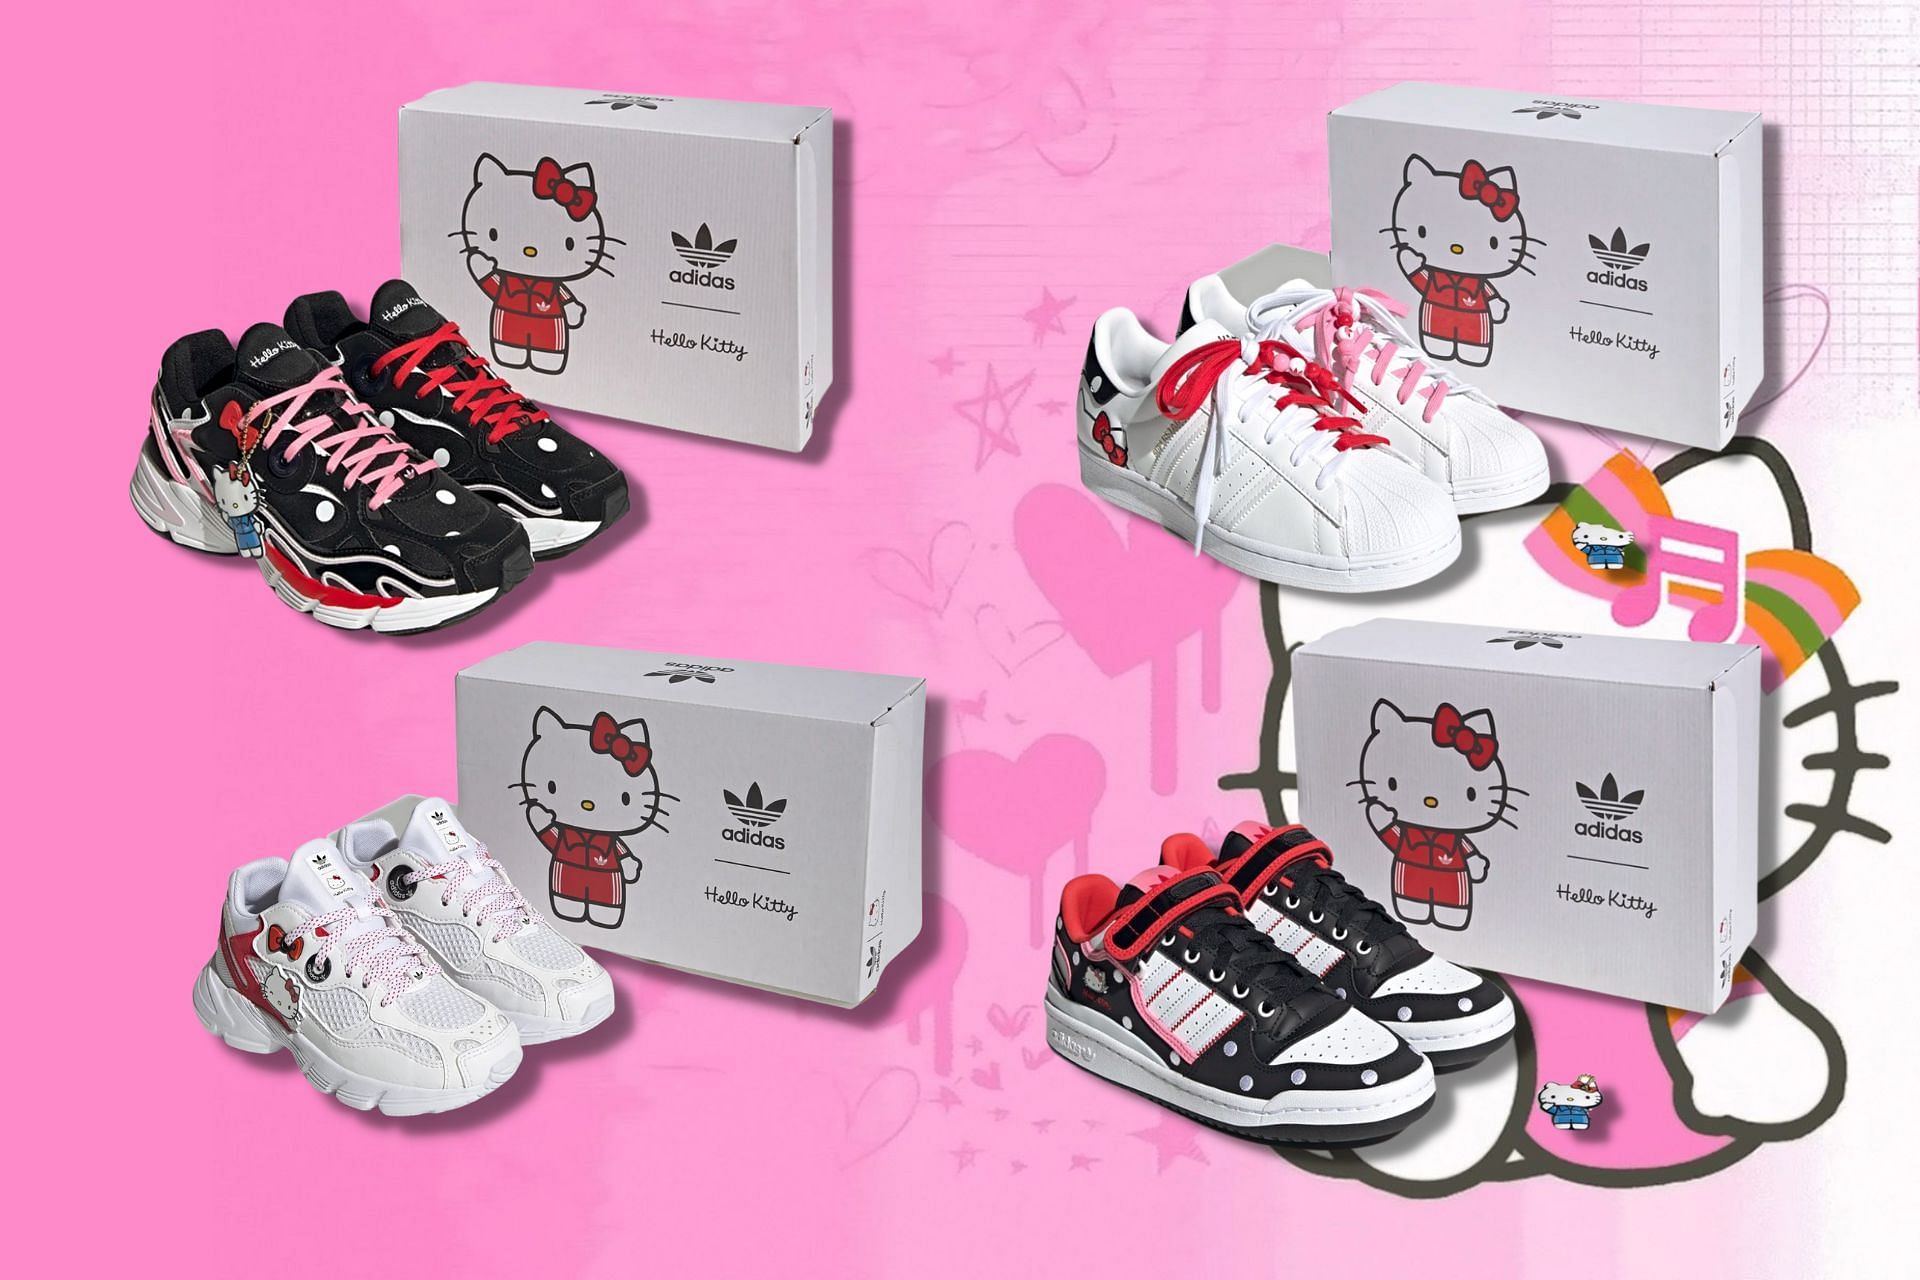  Hello Kitty x Adidas Originals collection (Image via Sportskeeda)